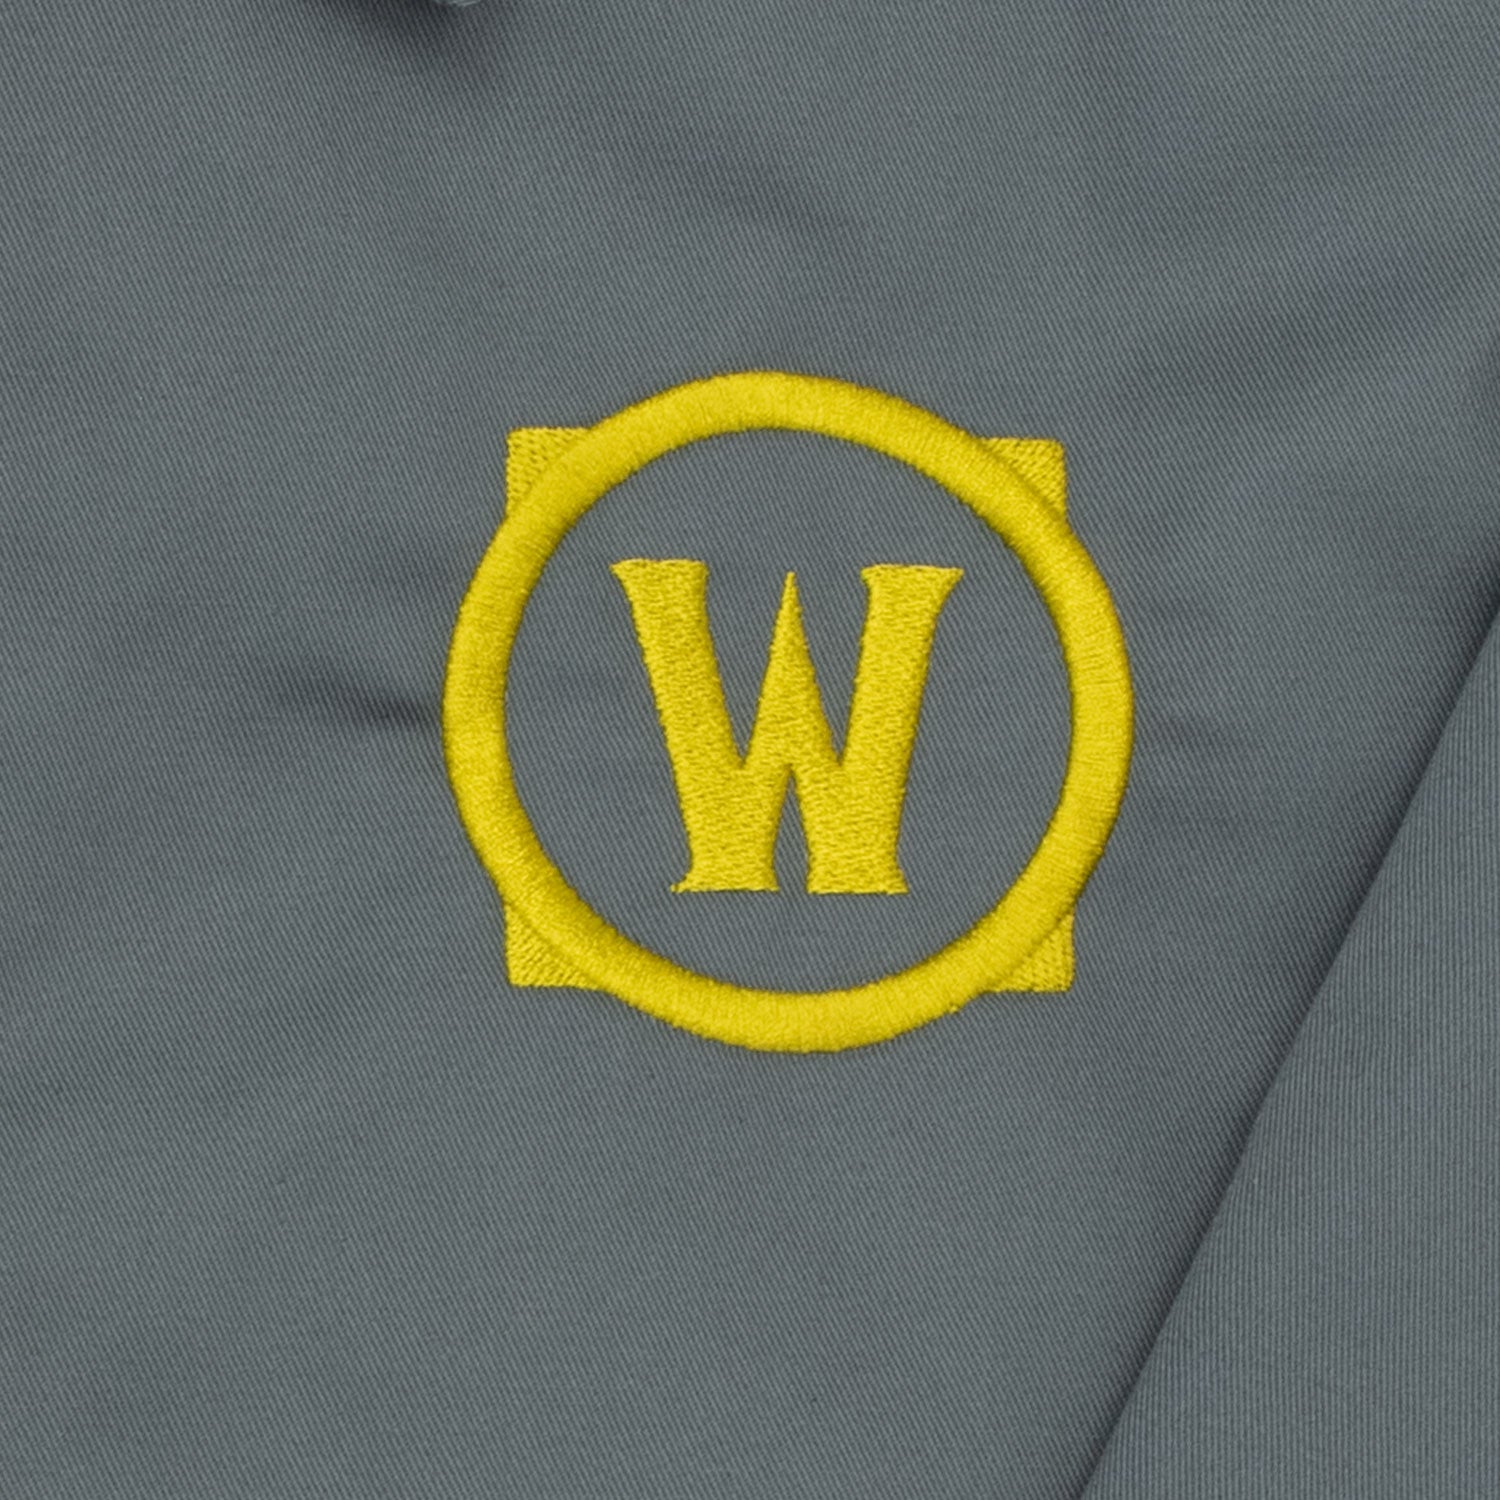 World of Warcraft Grey Work Jacket - Embroidery closeup